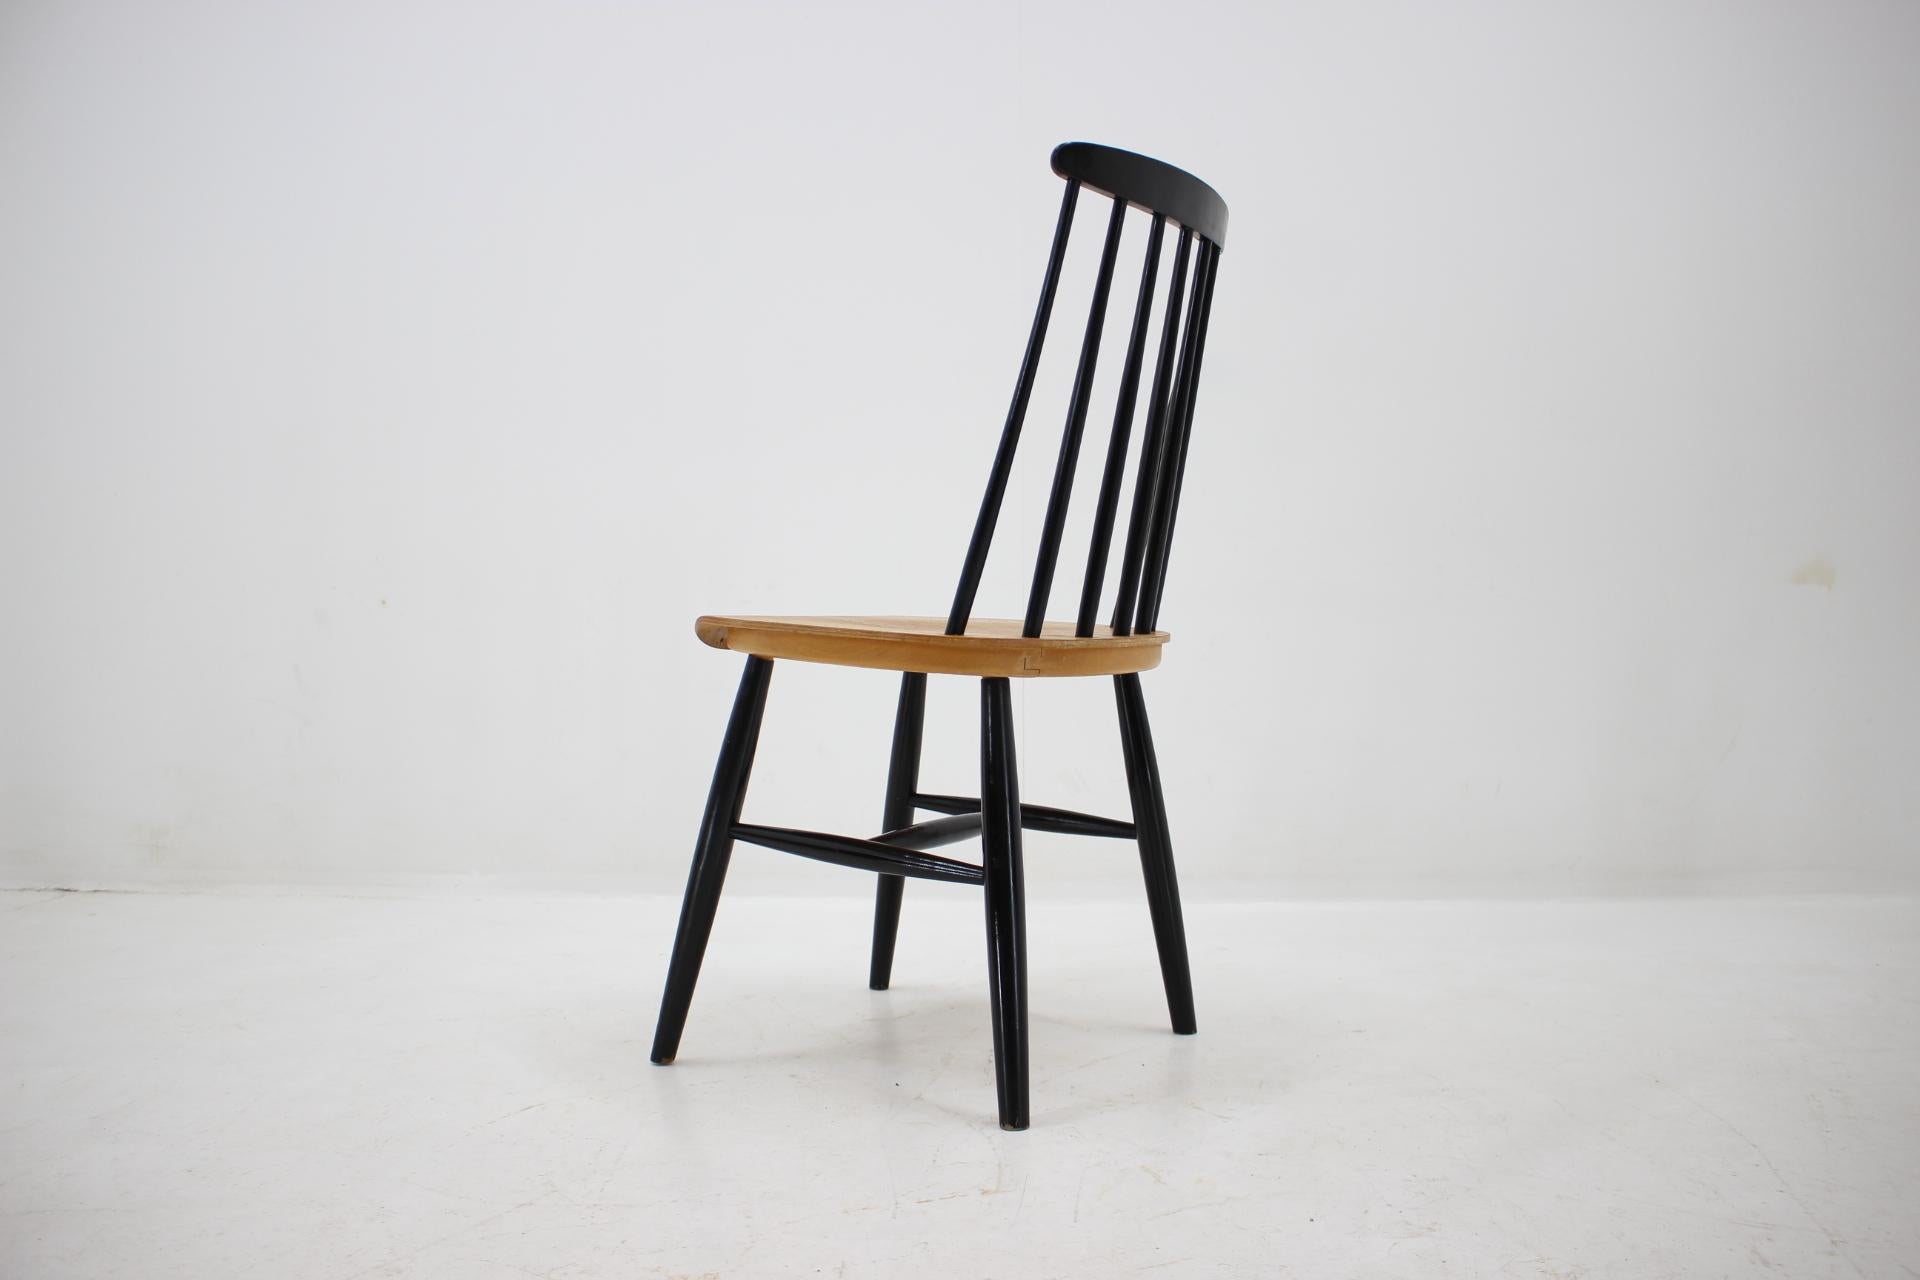 Lacquered Midcentury Chair Designed by Ilmari Tapiovaara, Finland, 1960s